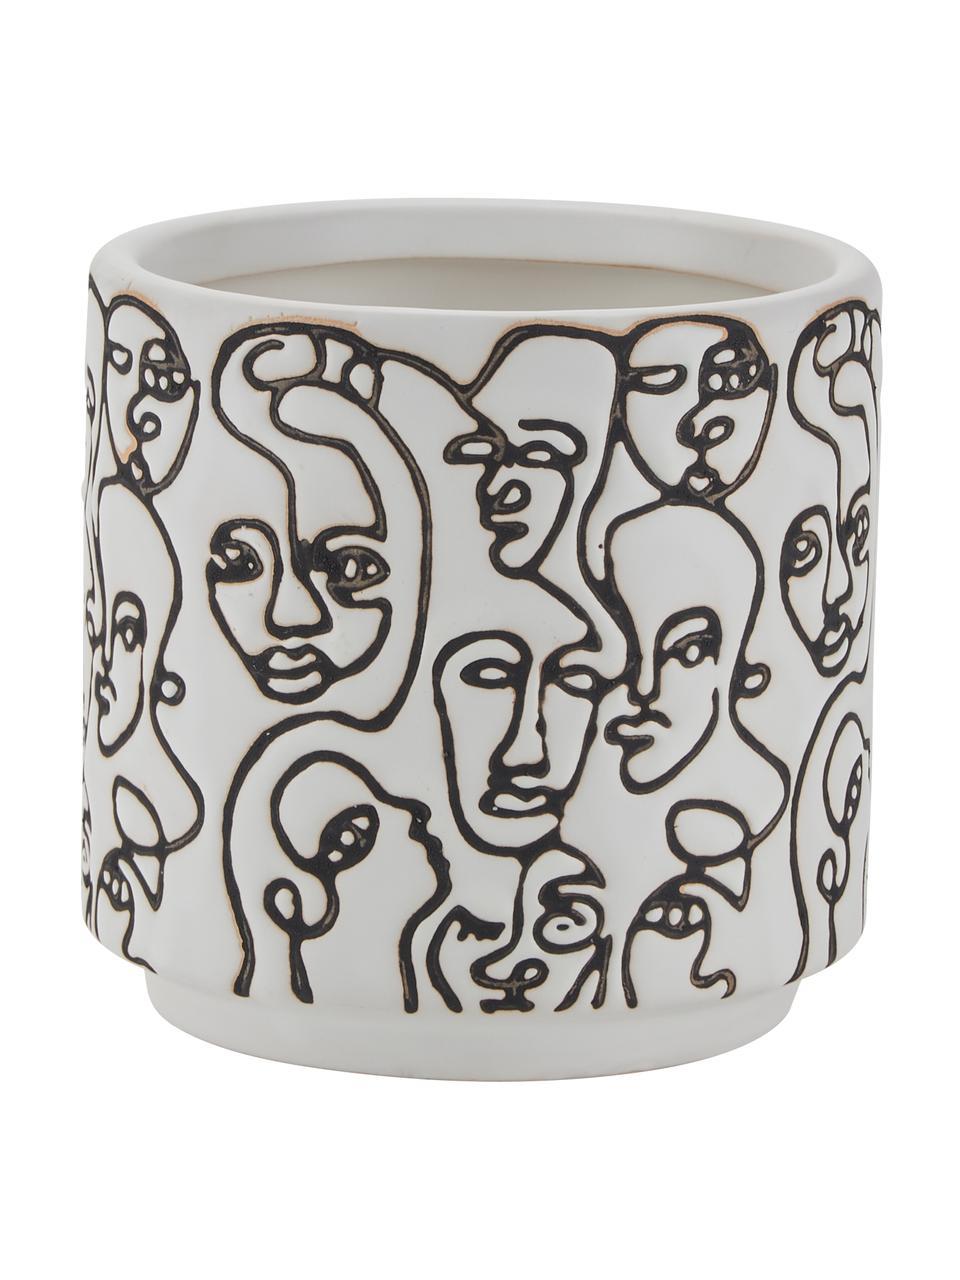 Portavaso con motivo viso Face Artwork, Ceramica, Bianco, nero, Ø 12 x Alt. 12 cm